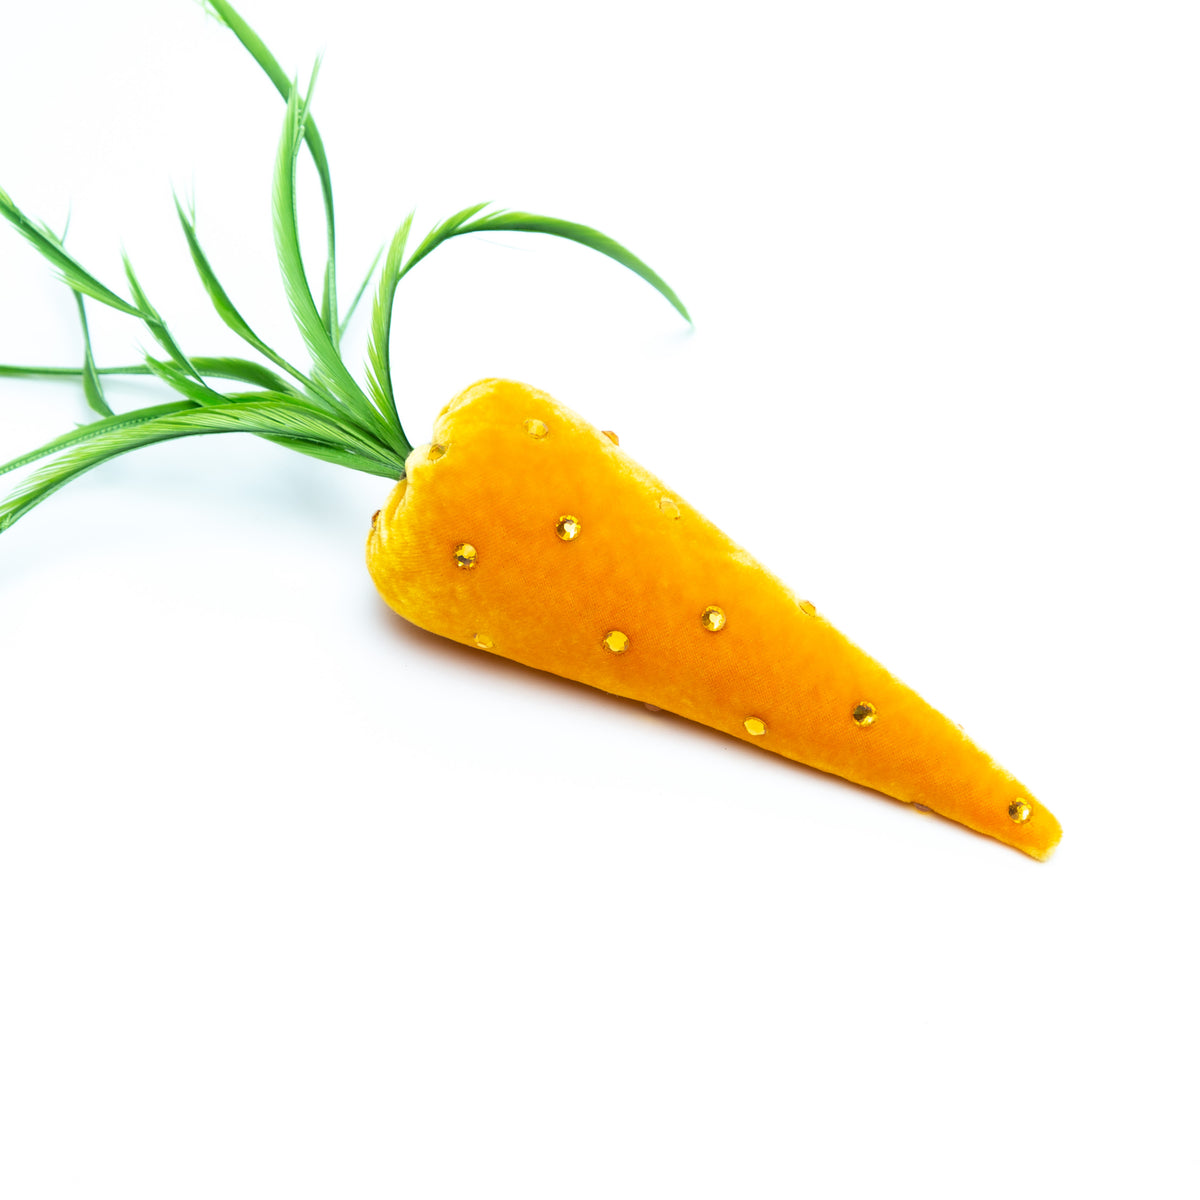 Crystal Carrot - Carrot